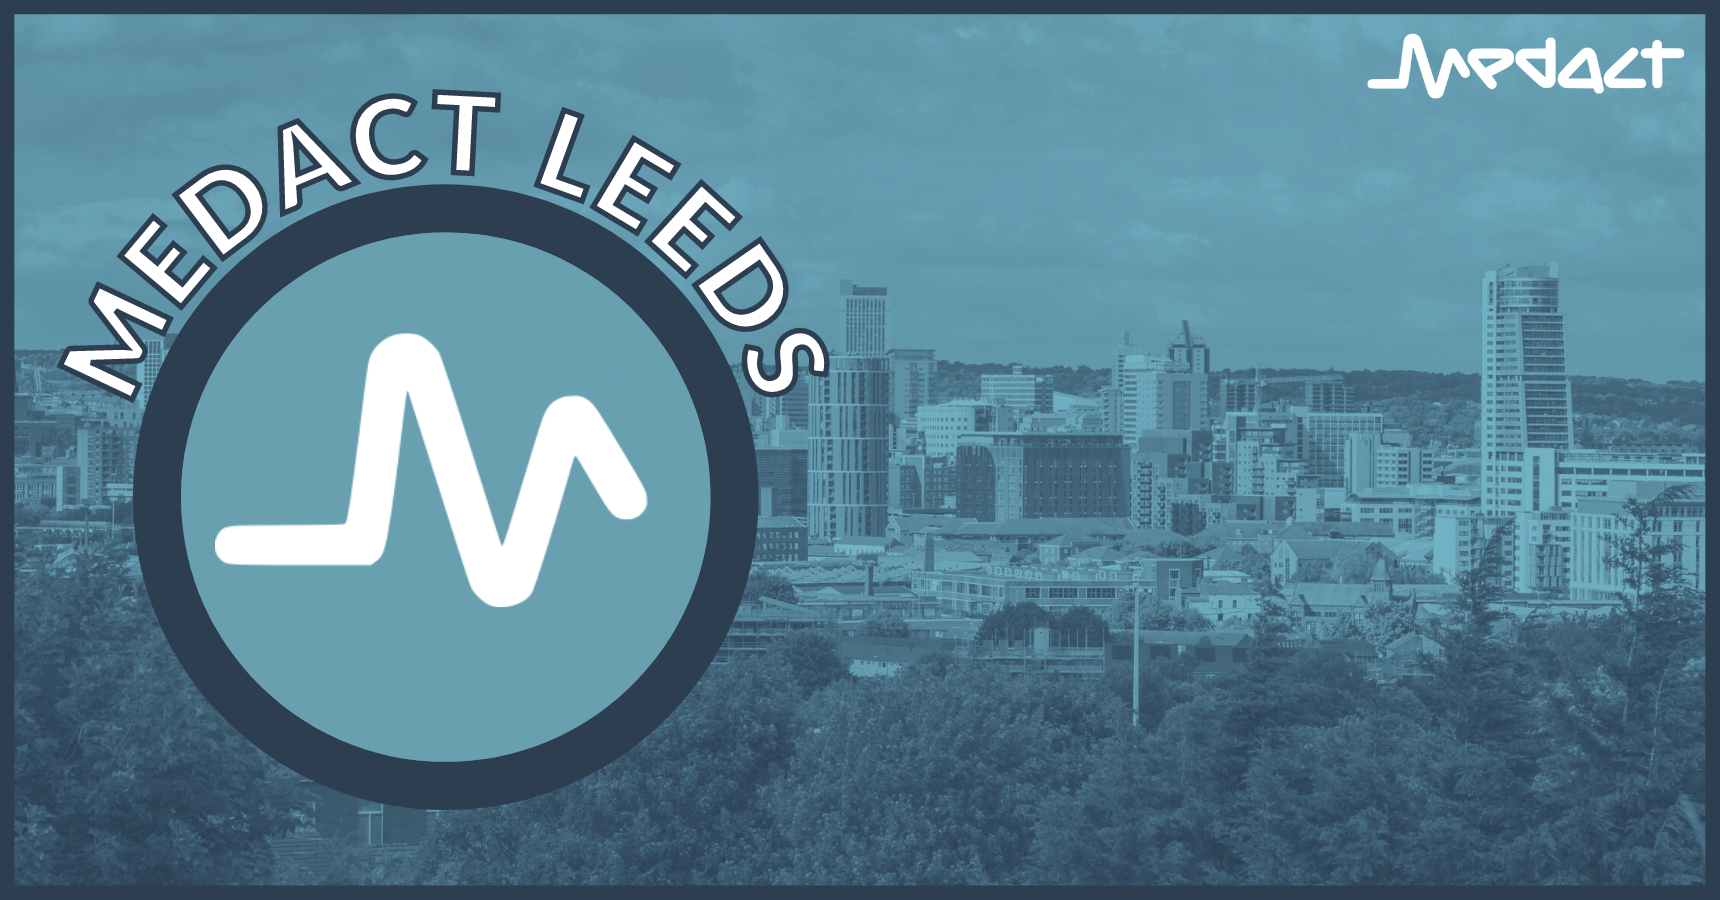 Medact Leeds group meeting: April